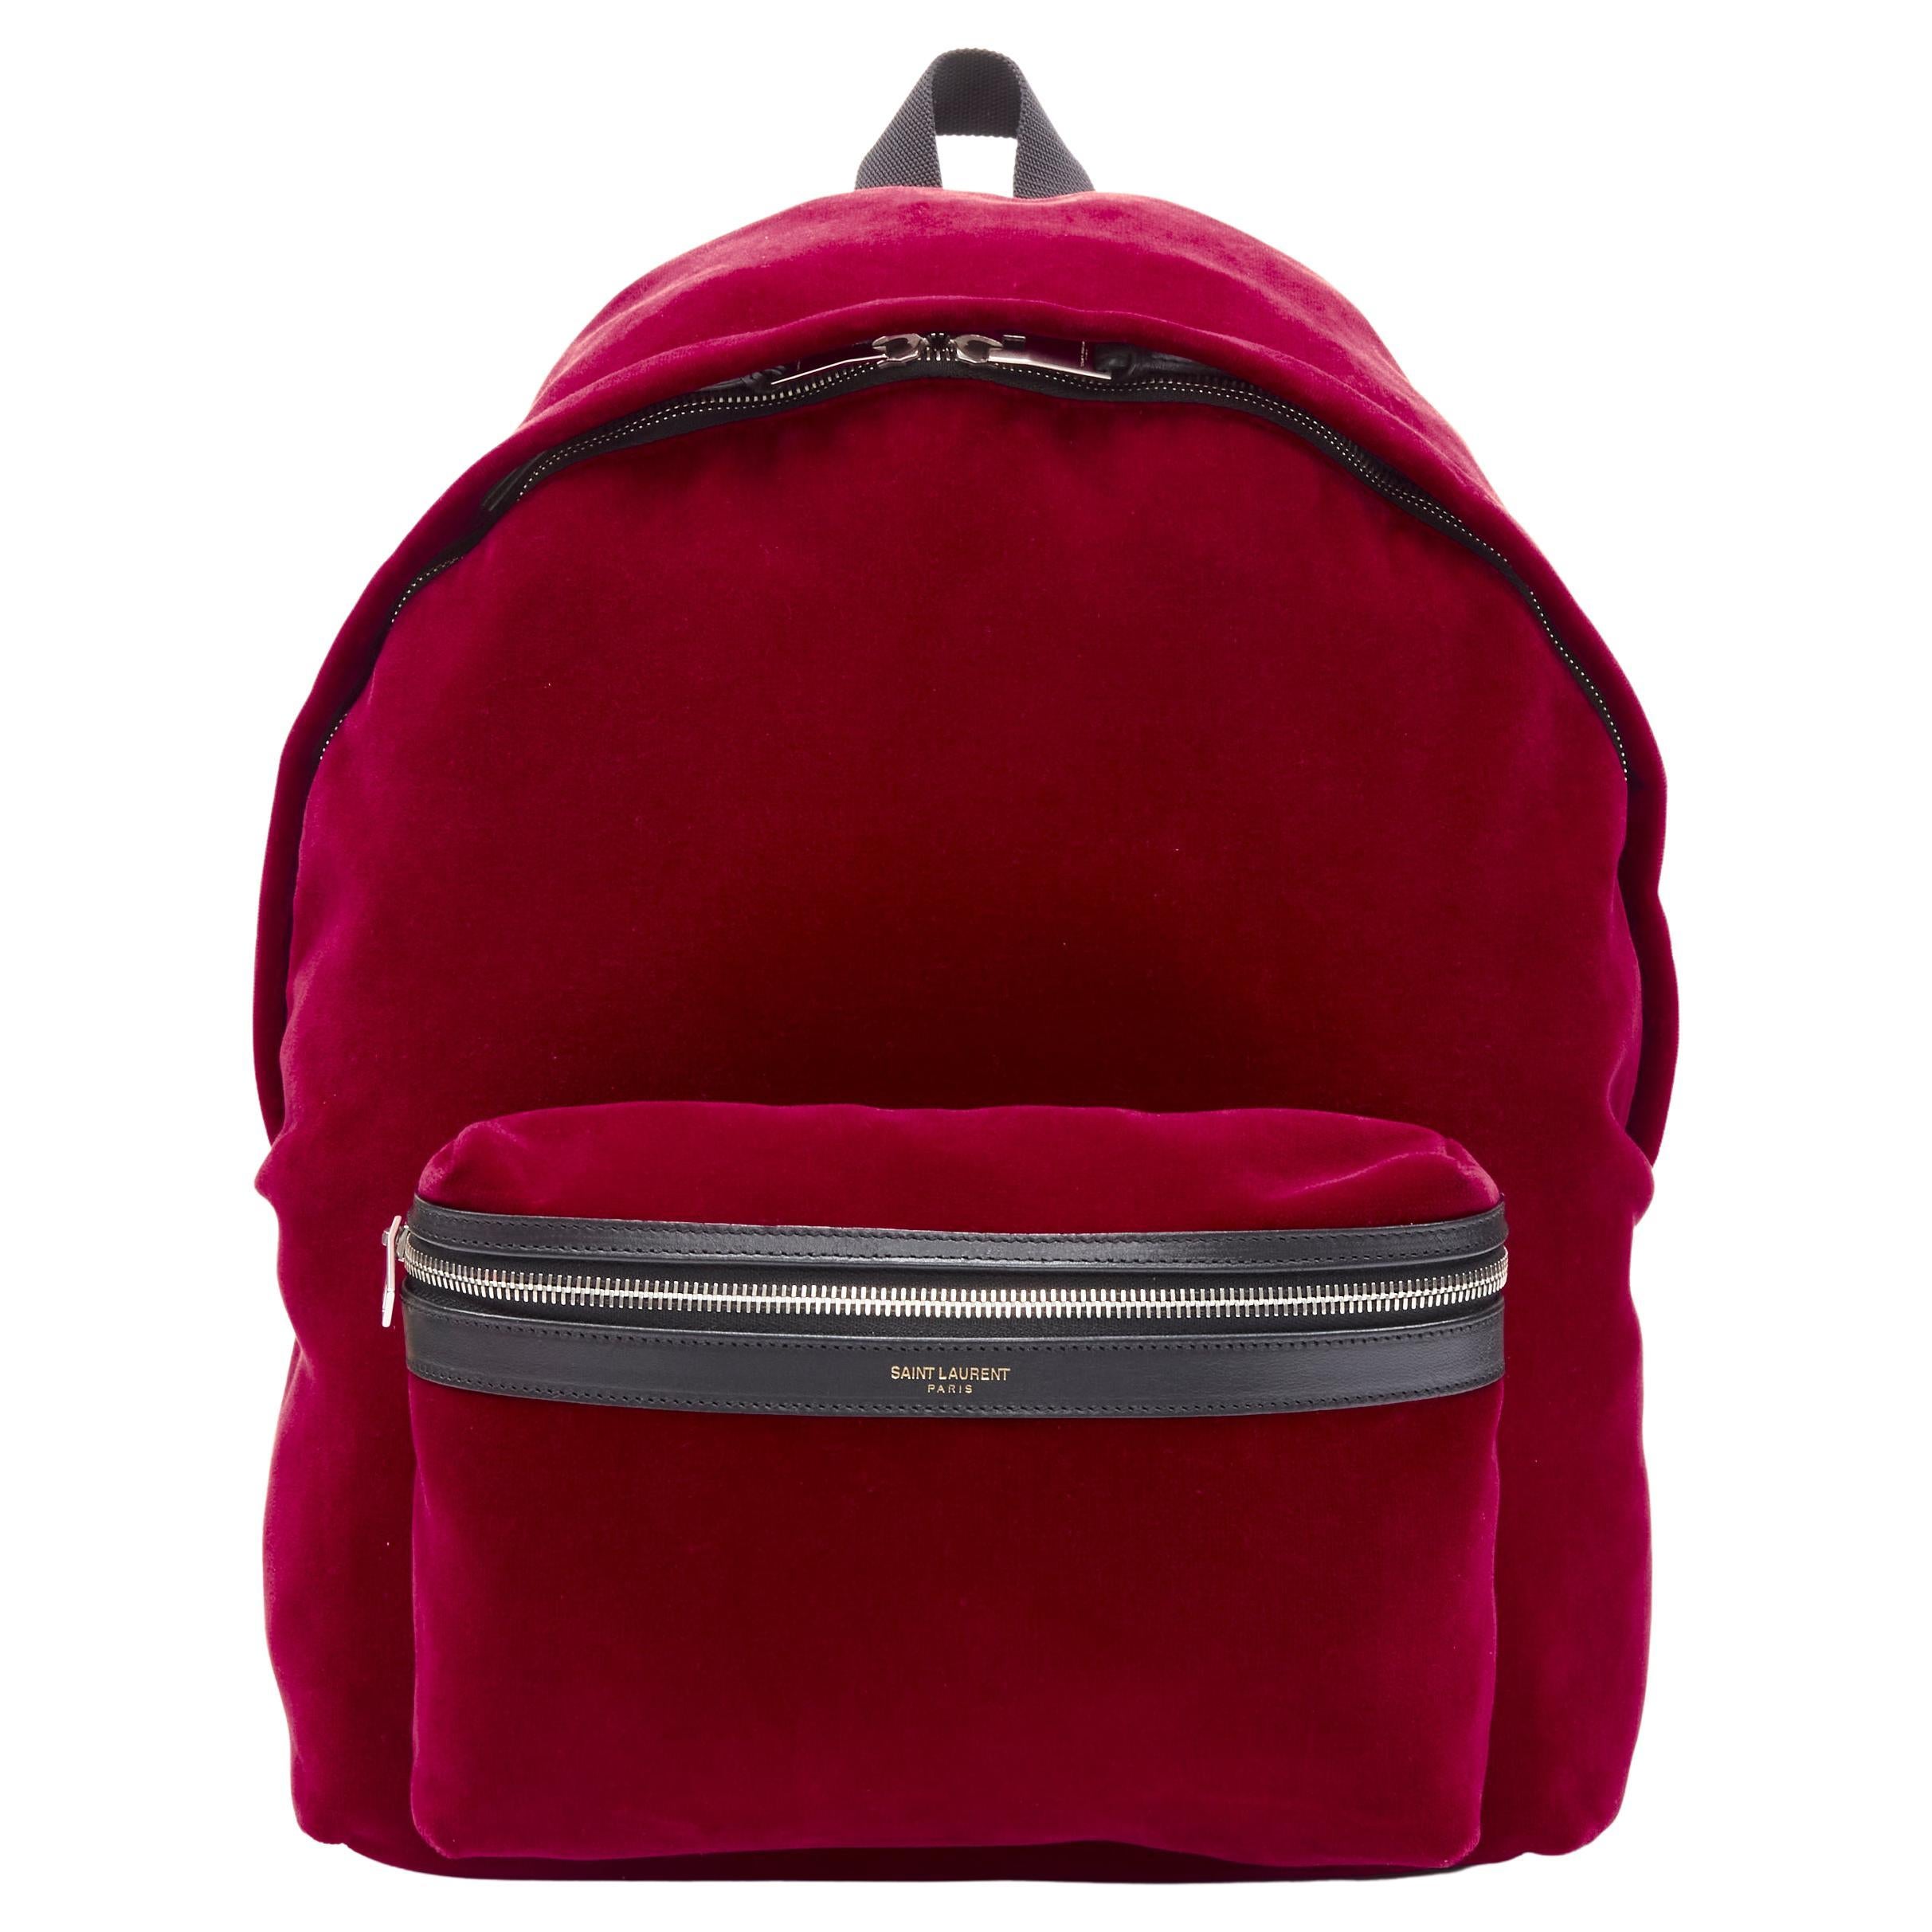 SAINT LAURENT City Rucksack aus rotem Samt mit schwarzem Lederbesatz